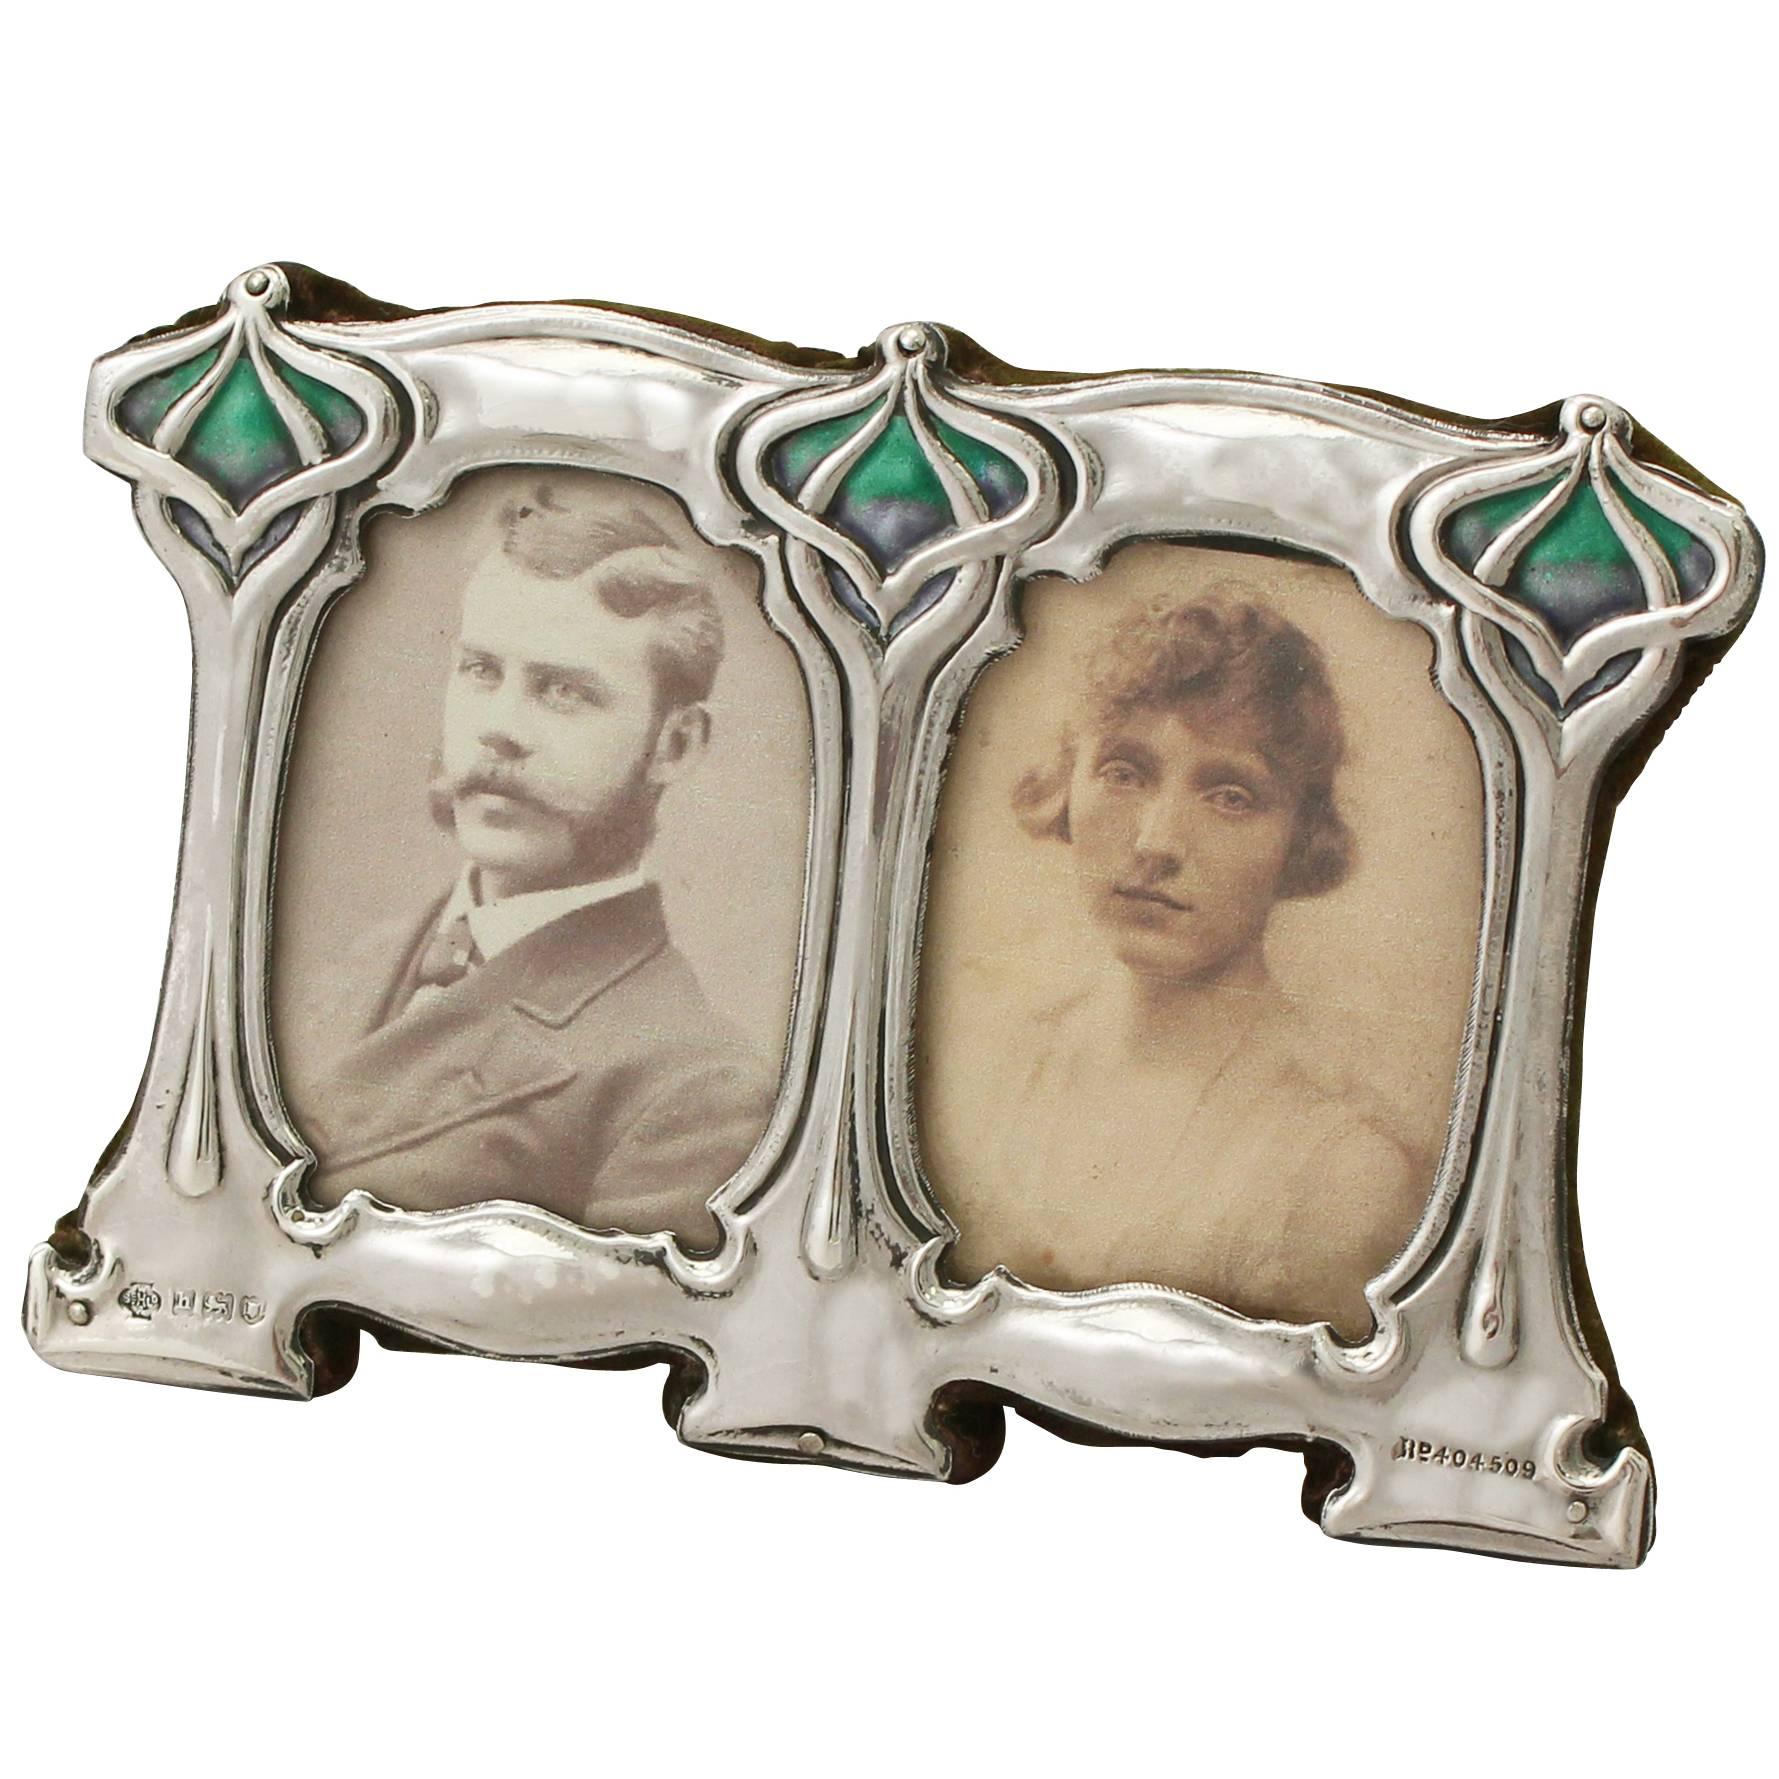 Edwardian Art Nouveau Enamel and Sterling Silver Double Photograph Frame